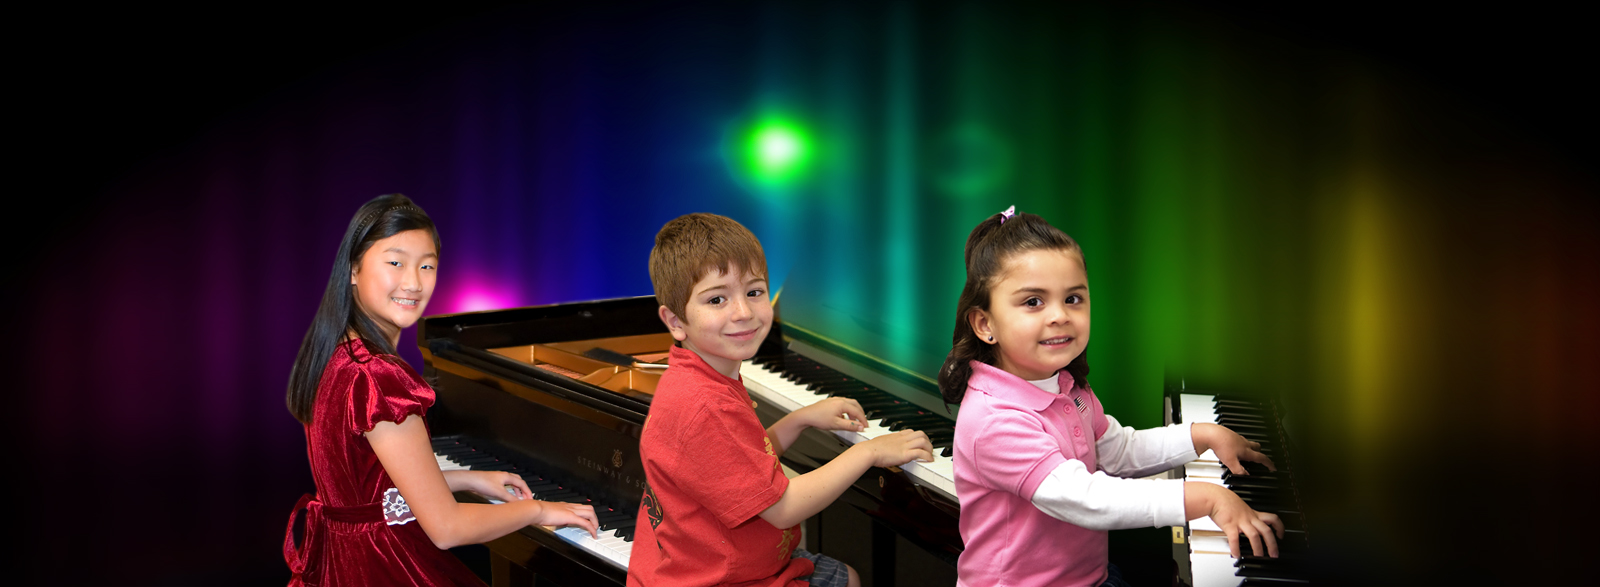 sunnyvale piano lessons - sunnyvale keyboard classes - sunnyvale piano teachers